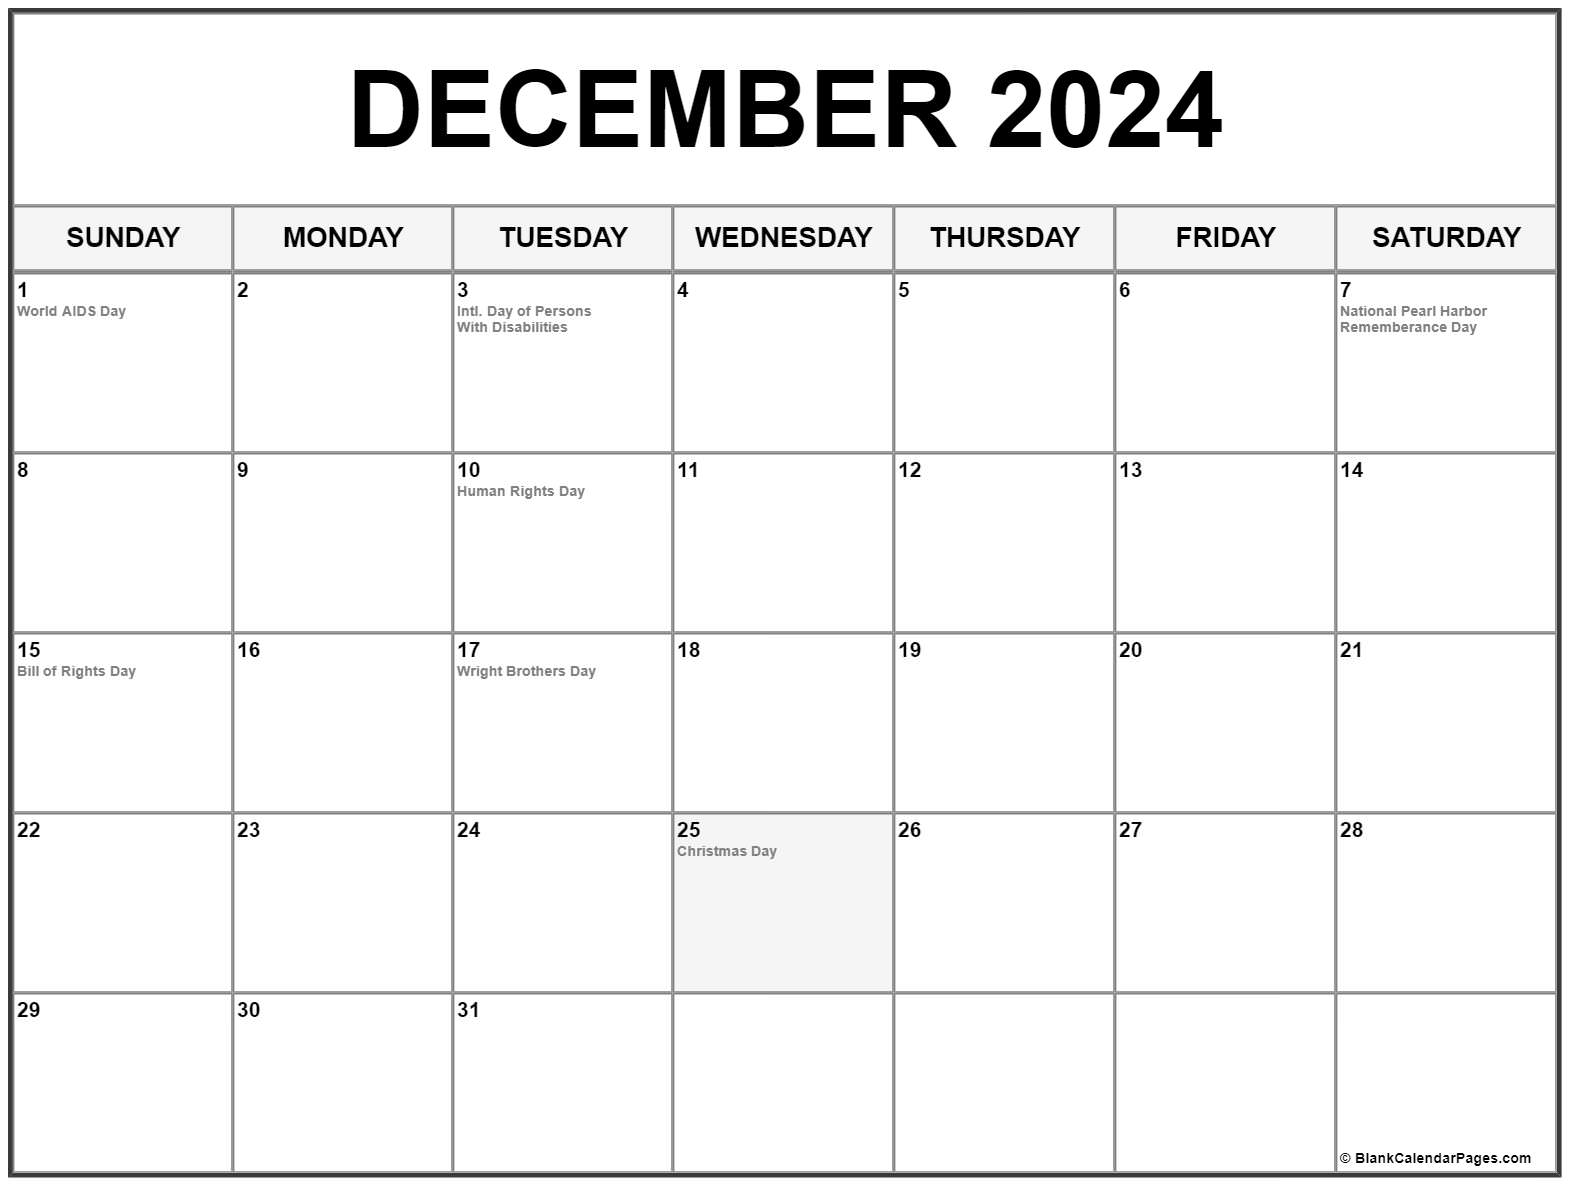 December 2022 Holiday Calendar December 2022 With Holidays Calendar